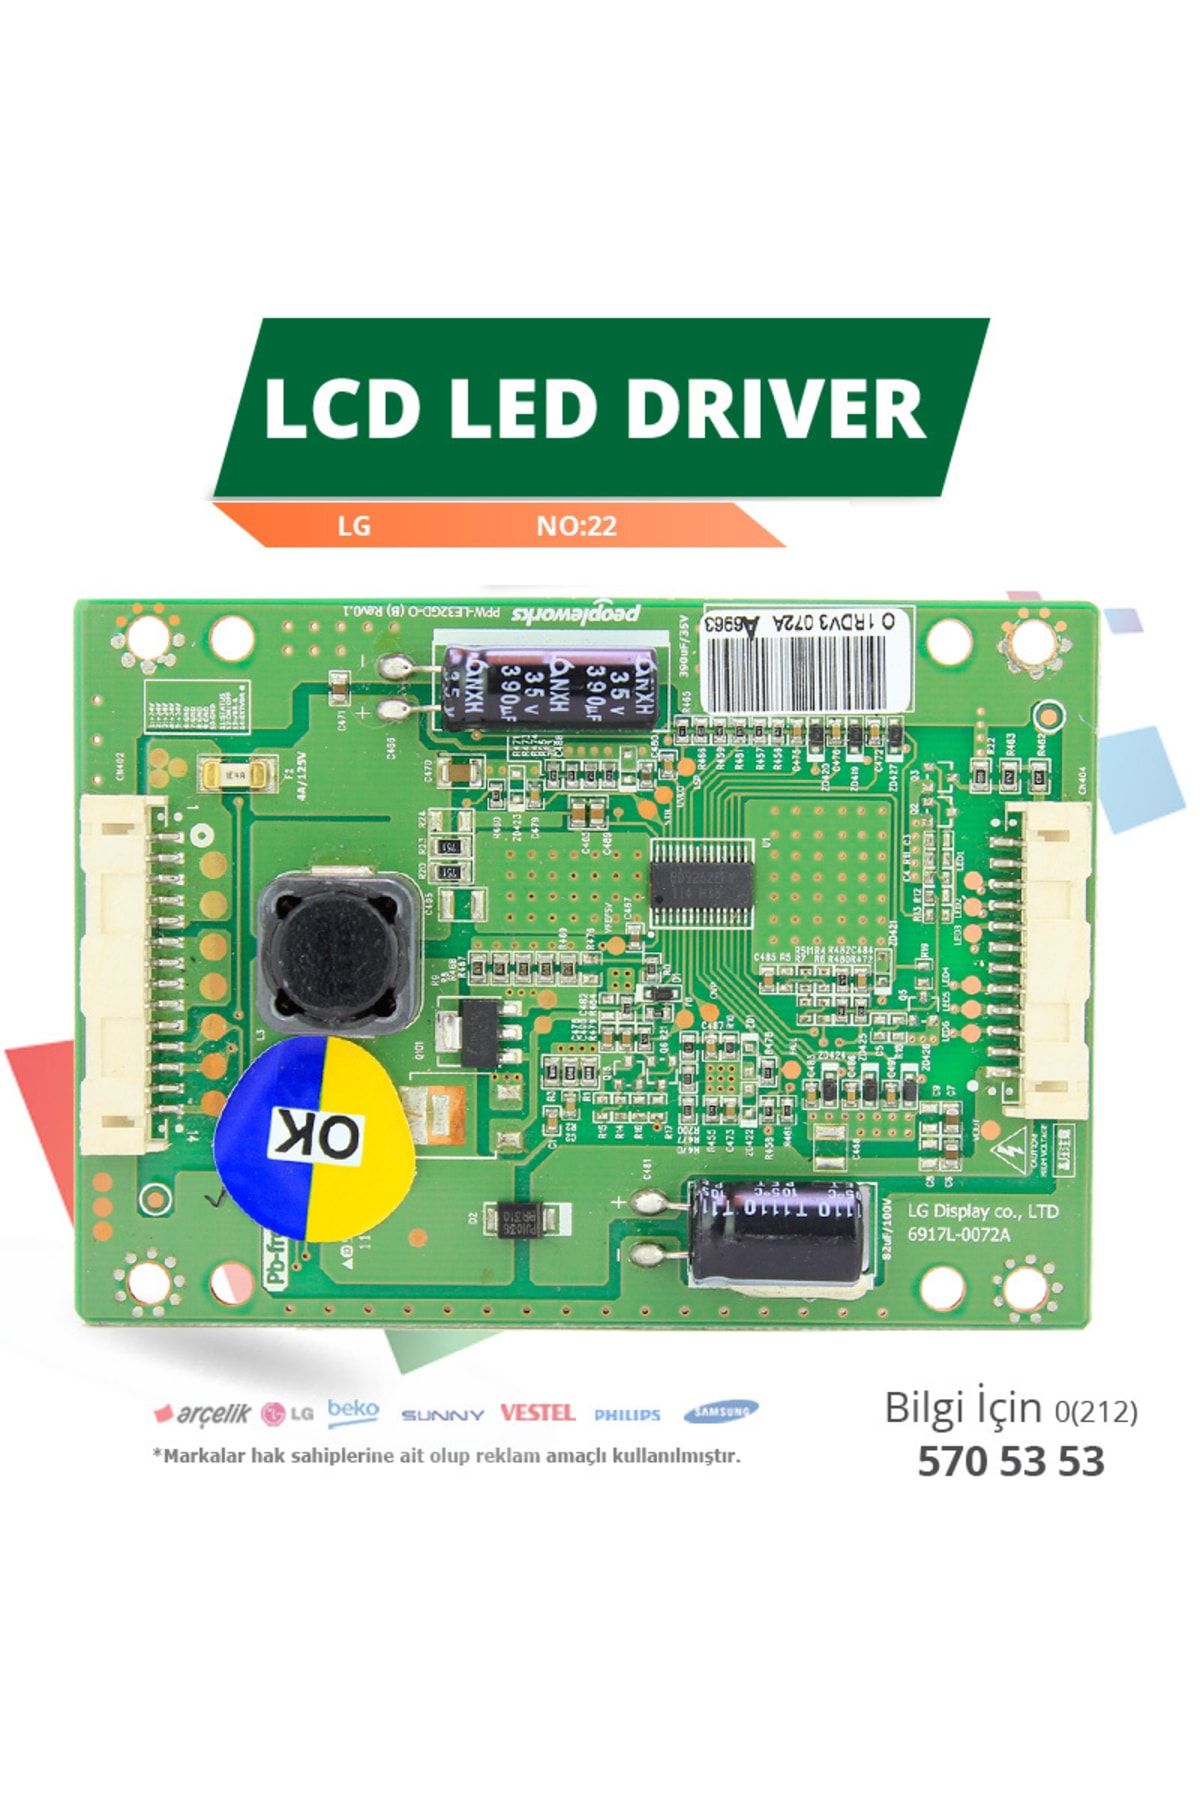 LG LCD LED DRİVER LG (6917L-0072A,PPW-LE32GD-O(B) REV0.1) (LC320EXN SD A1) (NO:22)